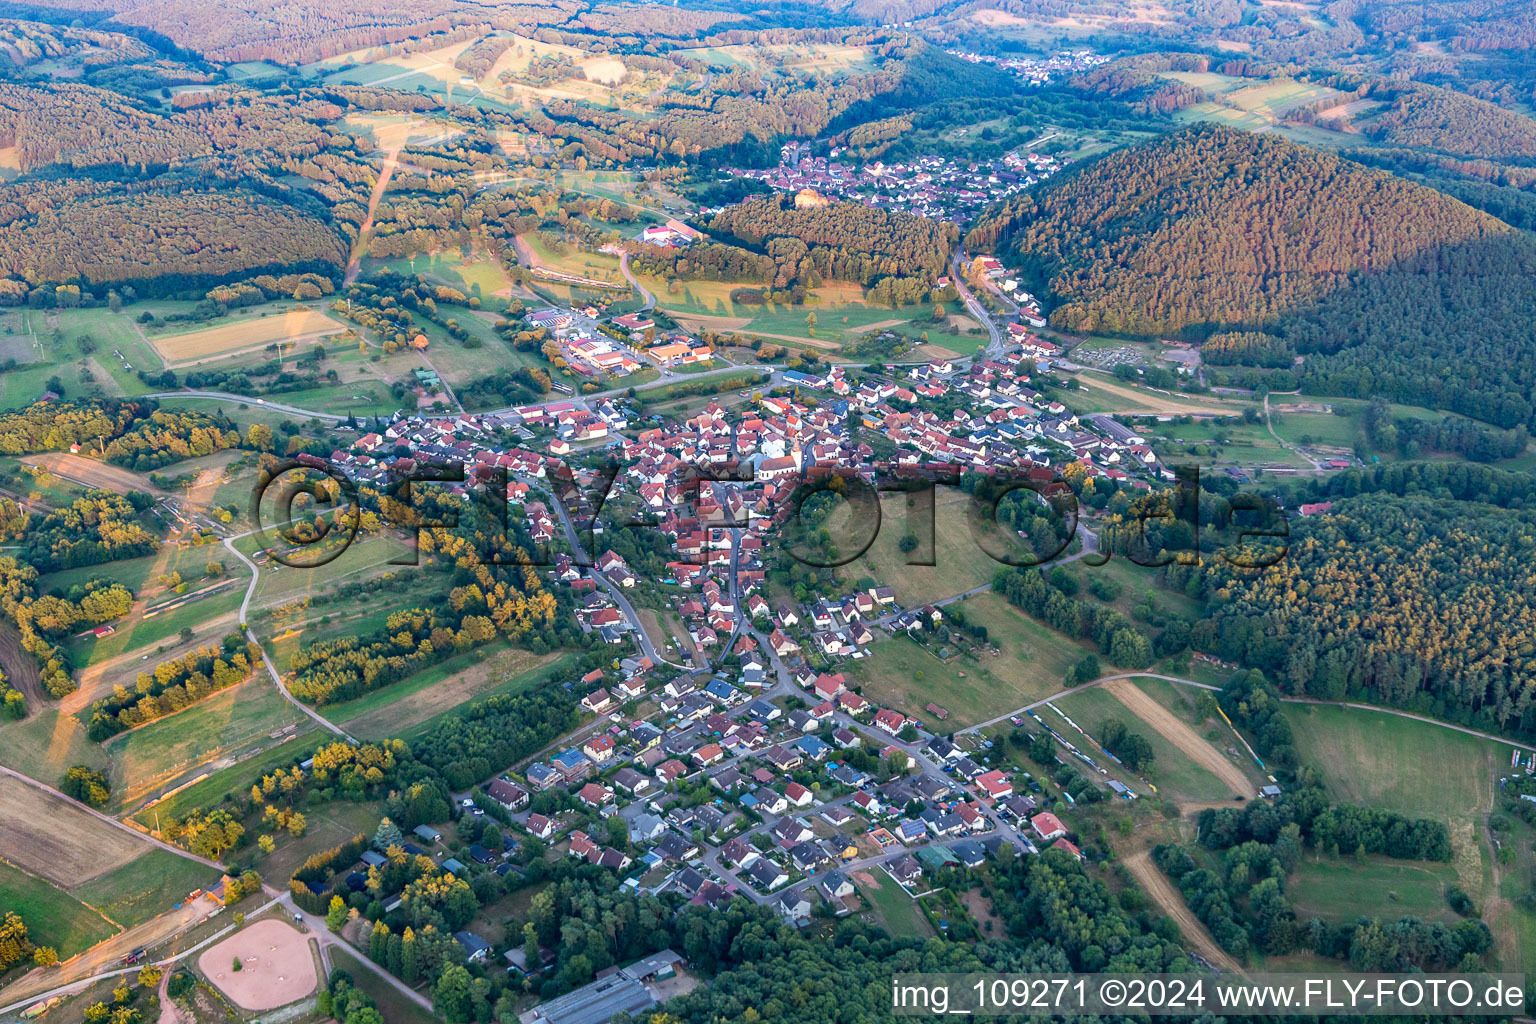 Quartier Gossersweiler in Gossersweiler-Stein dans le département Rhénanie-Palatinat, Allemagne vue d'en haut